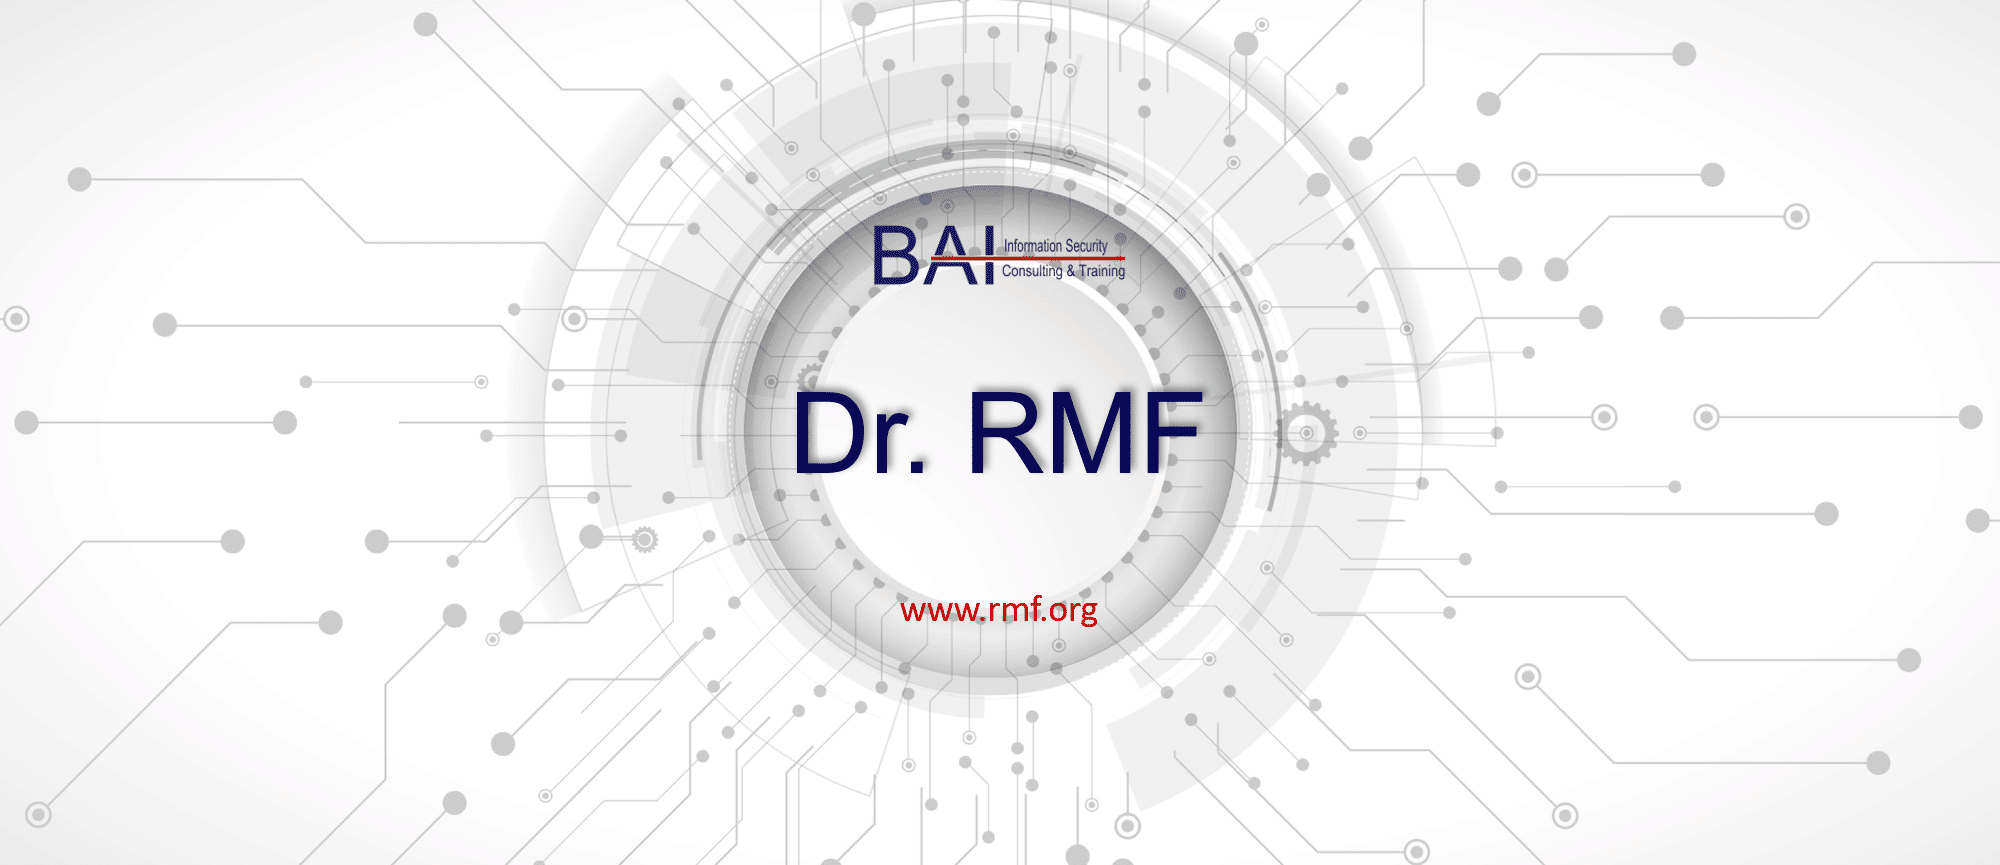 Dear Dr. RMF